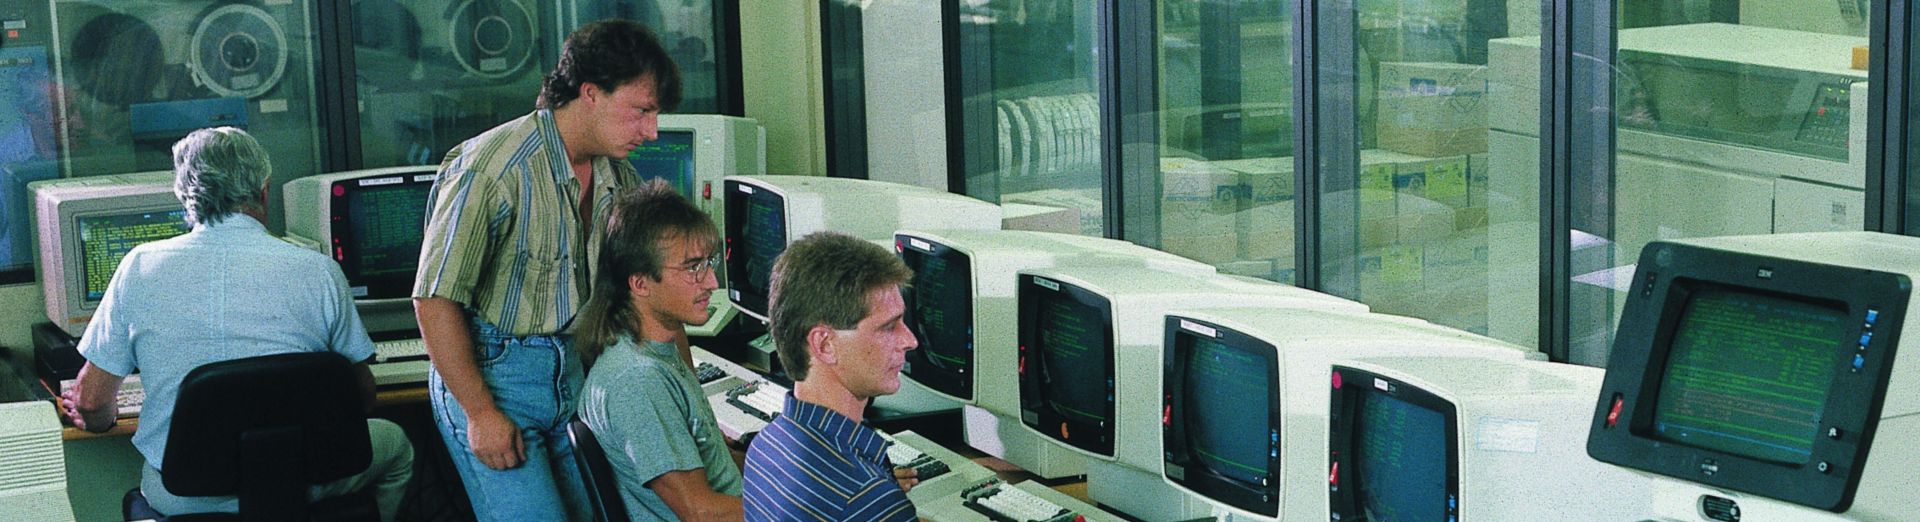 SAP Data Center in 1989